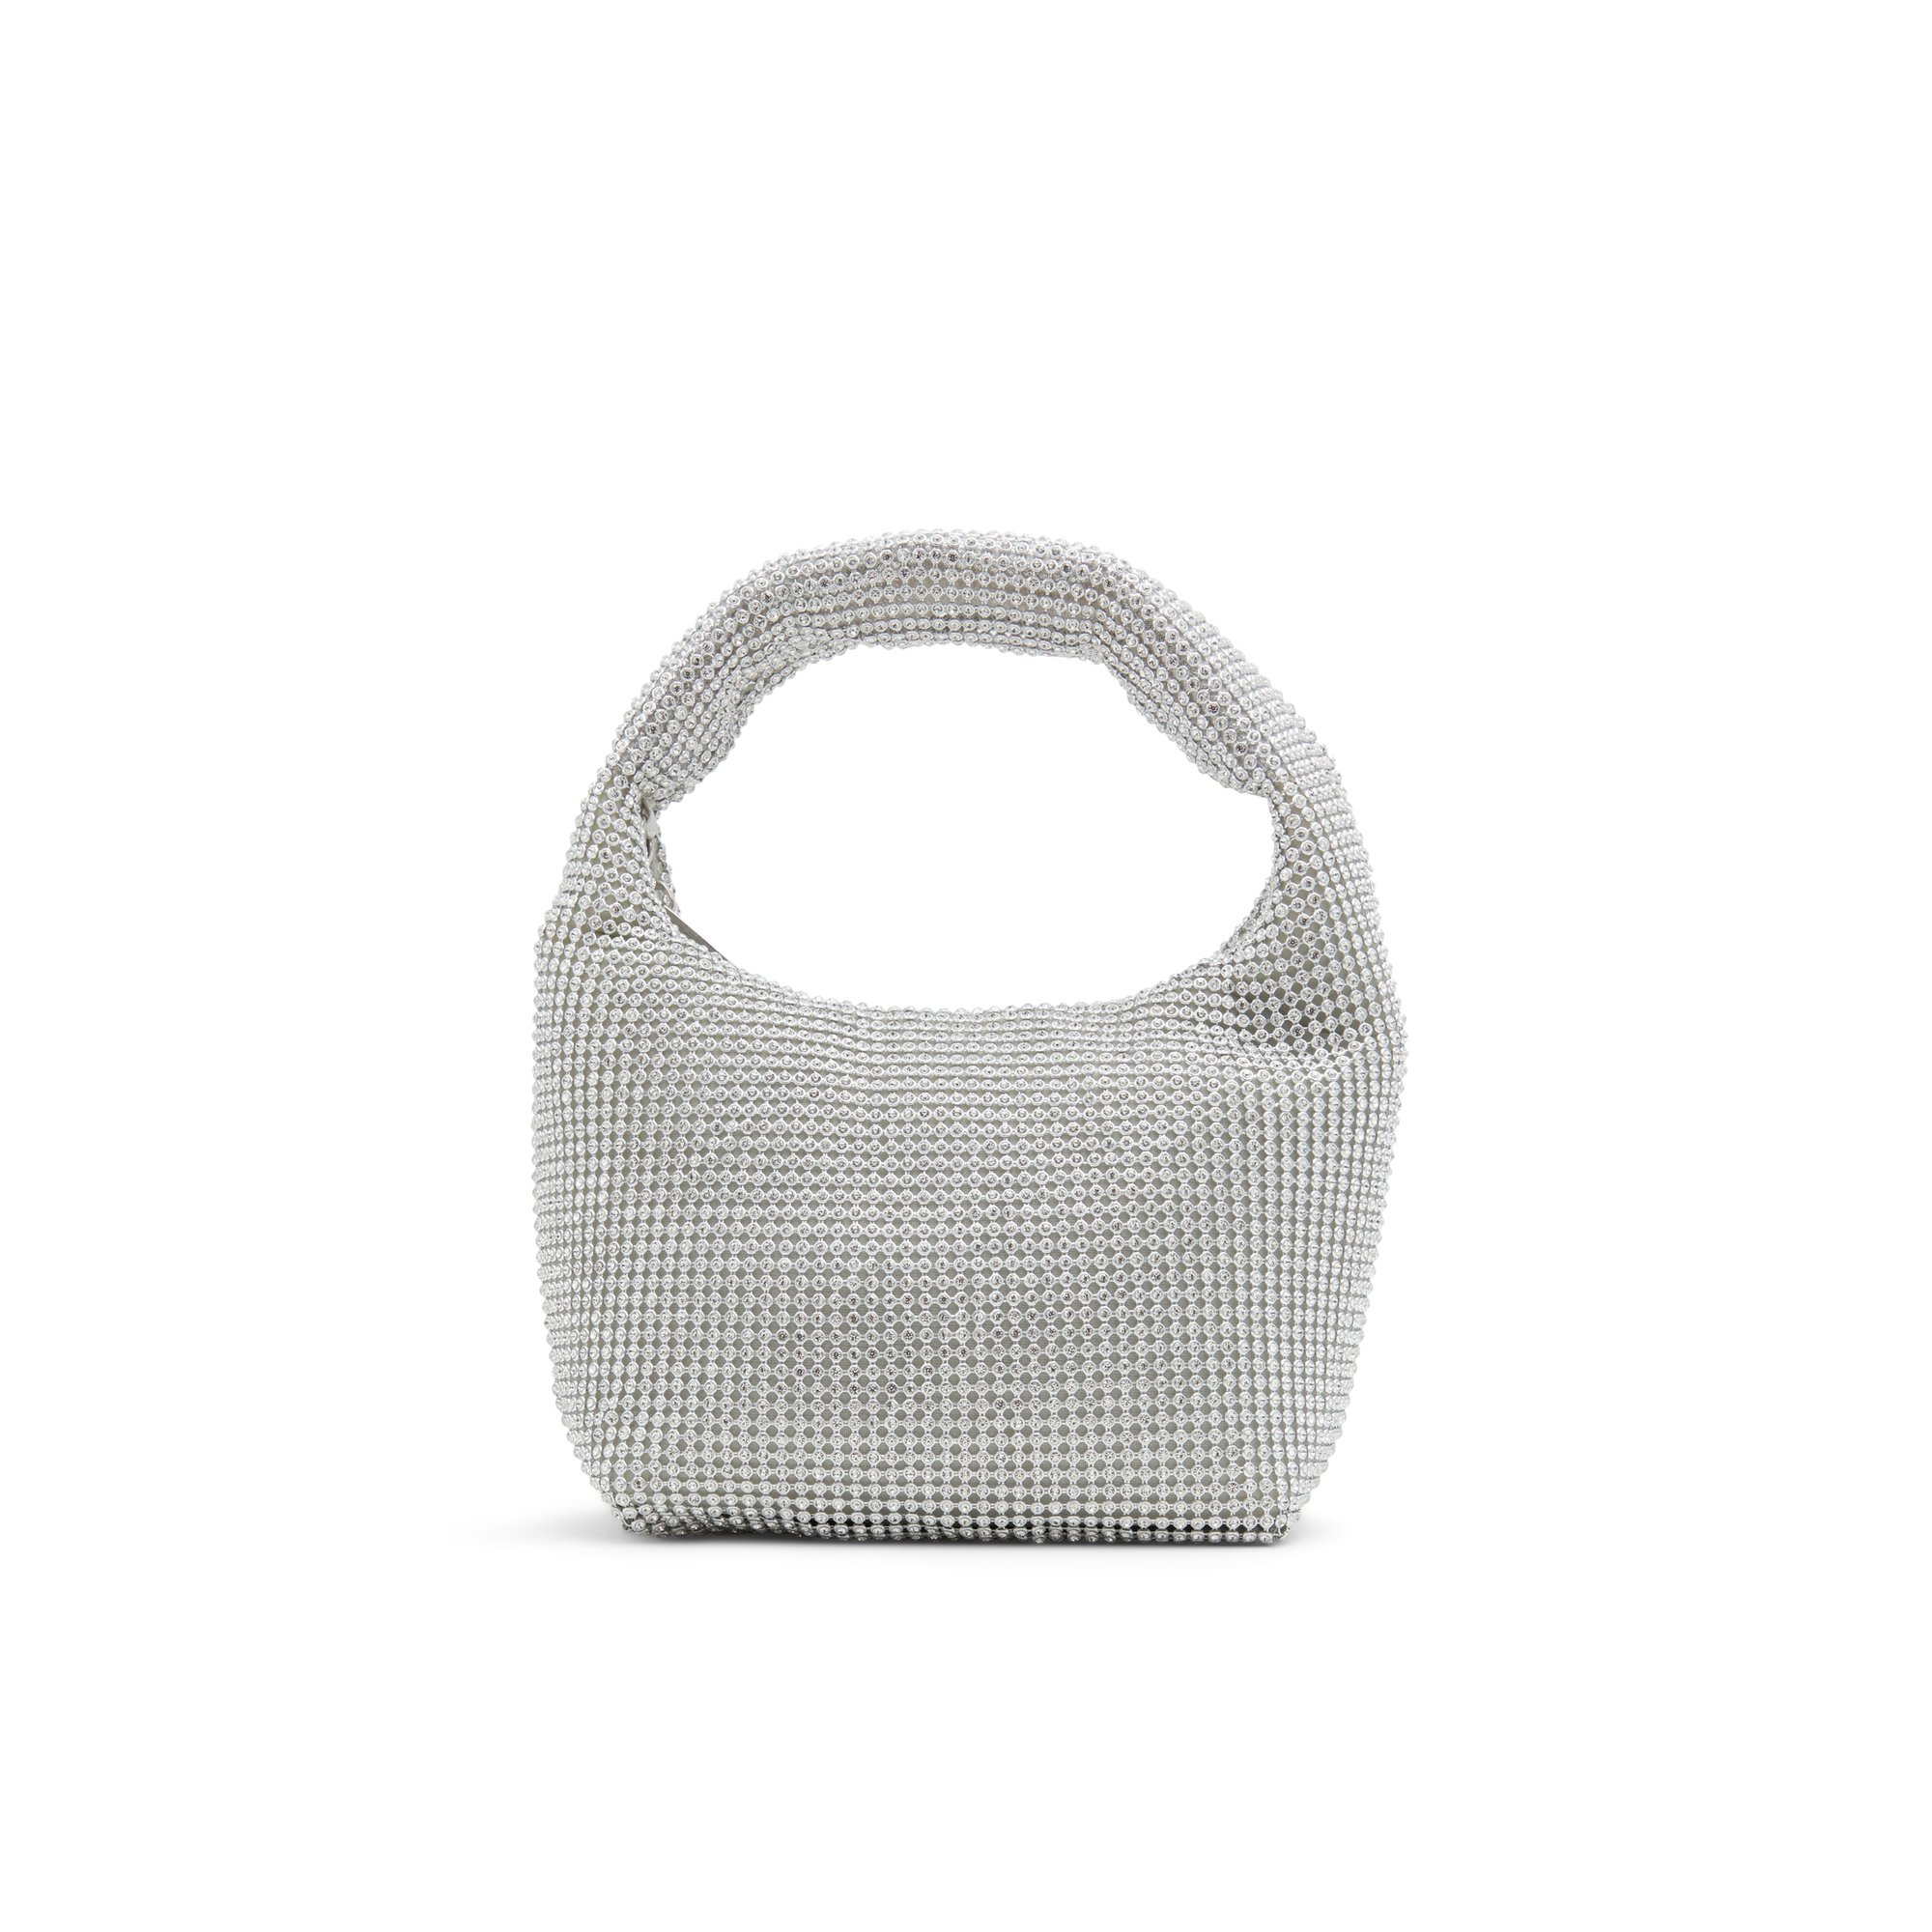 ALDO Ishana - Women's Top Handle Handbag - Silver